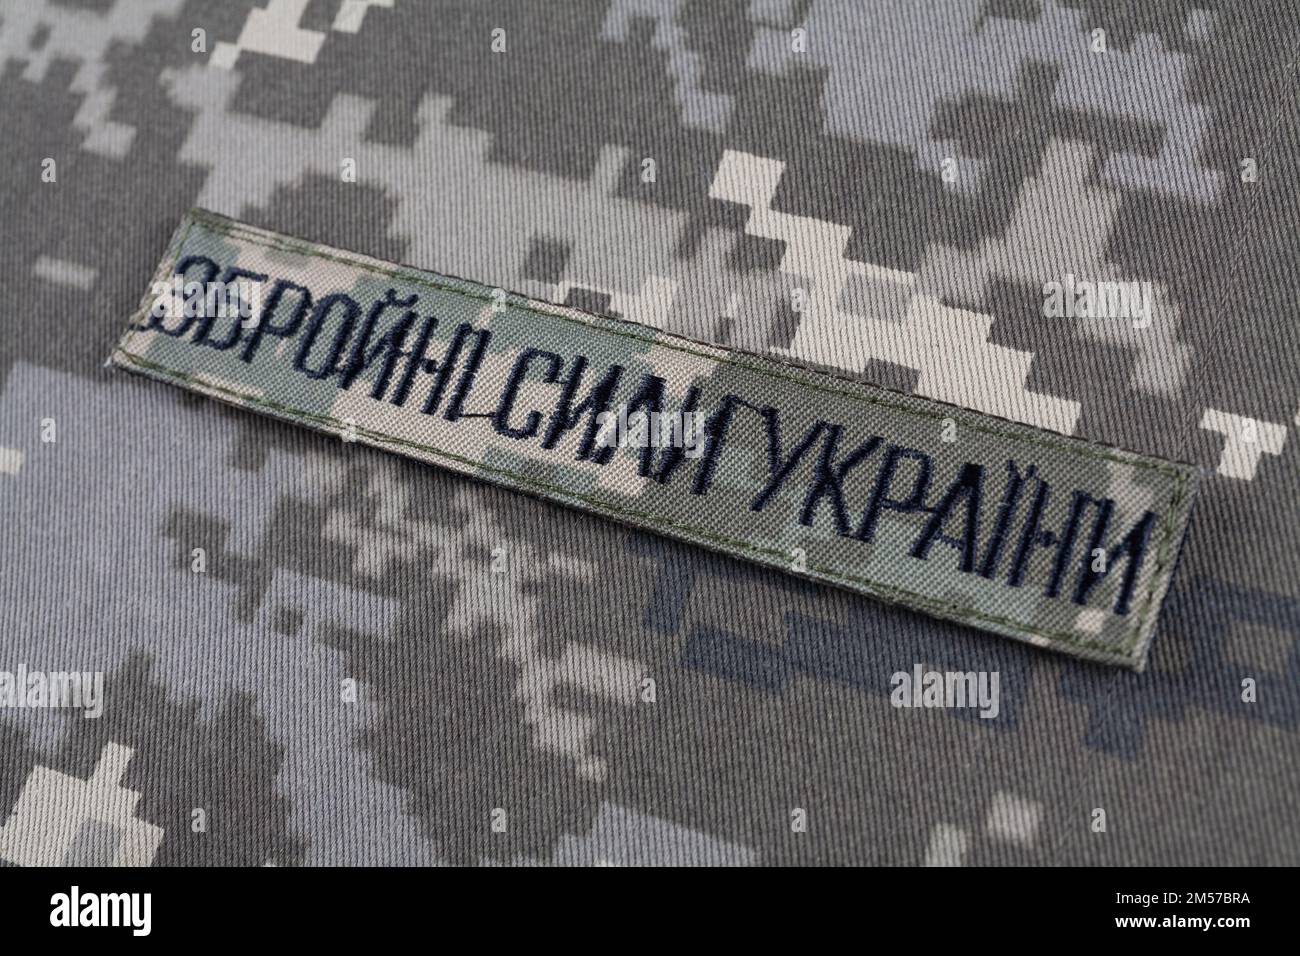 KYIV, UKRAINE - October 5, 2022. Russian invasion in Ukraine 2022. Ukraine Army uniform insignia badge on camouflaged uniform background. Text in ukra Stock Photo